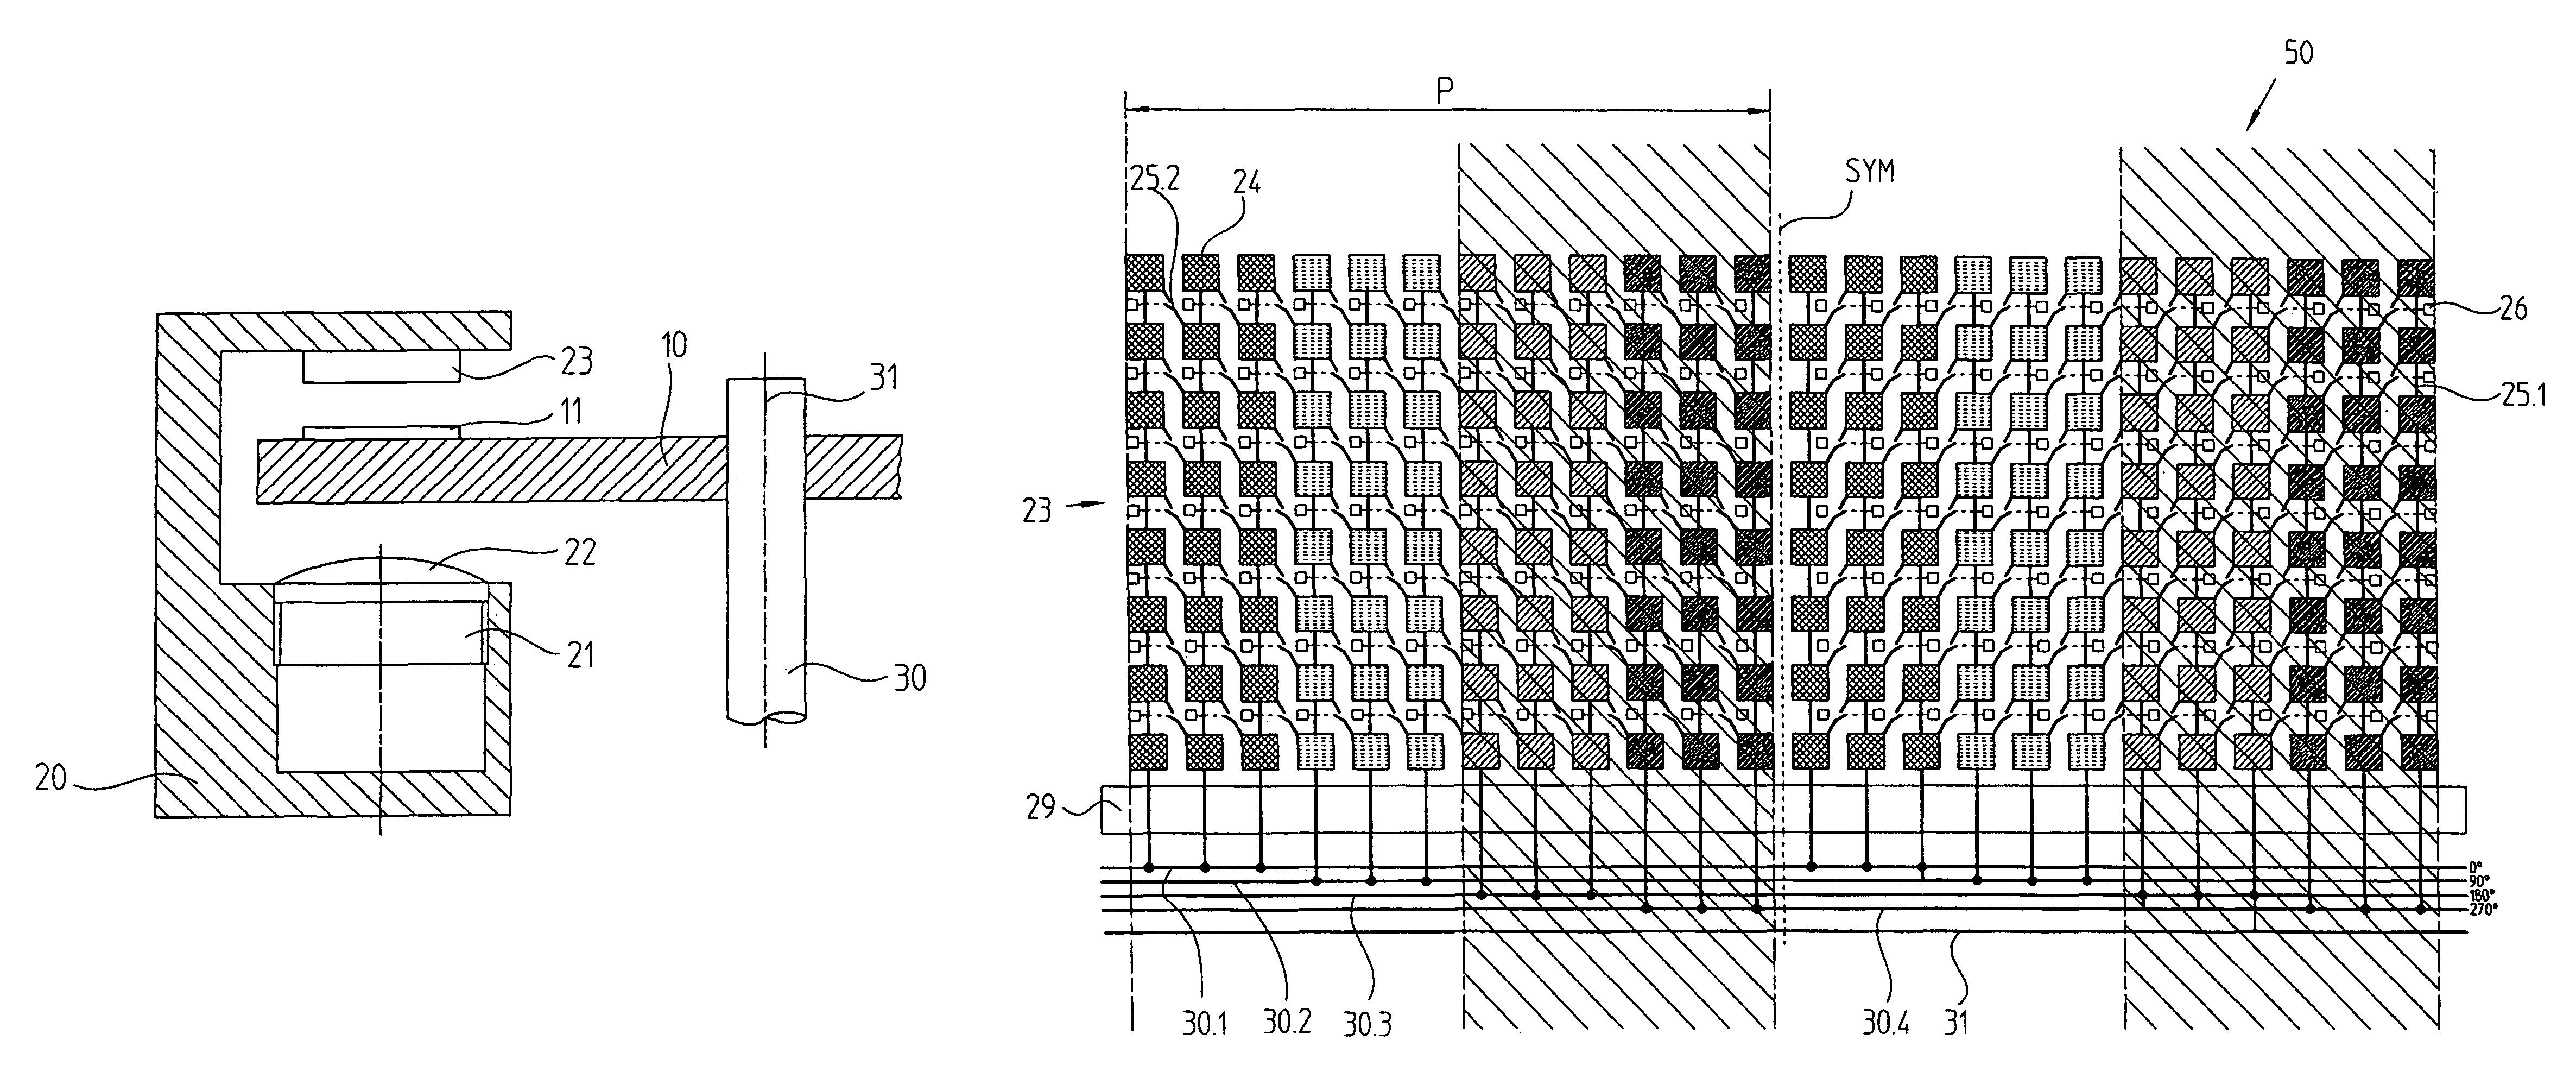 Detector element matrix for an optical position measuring instrument